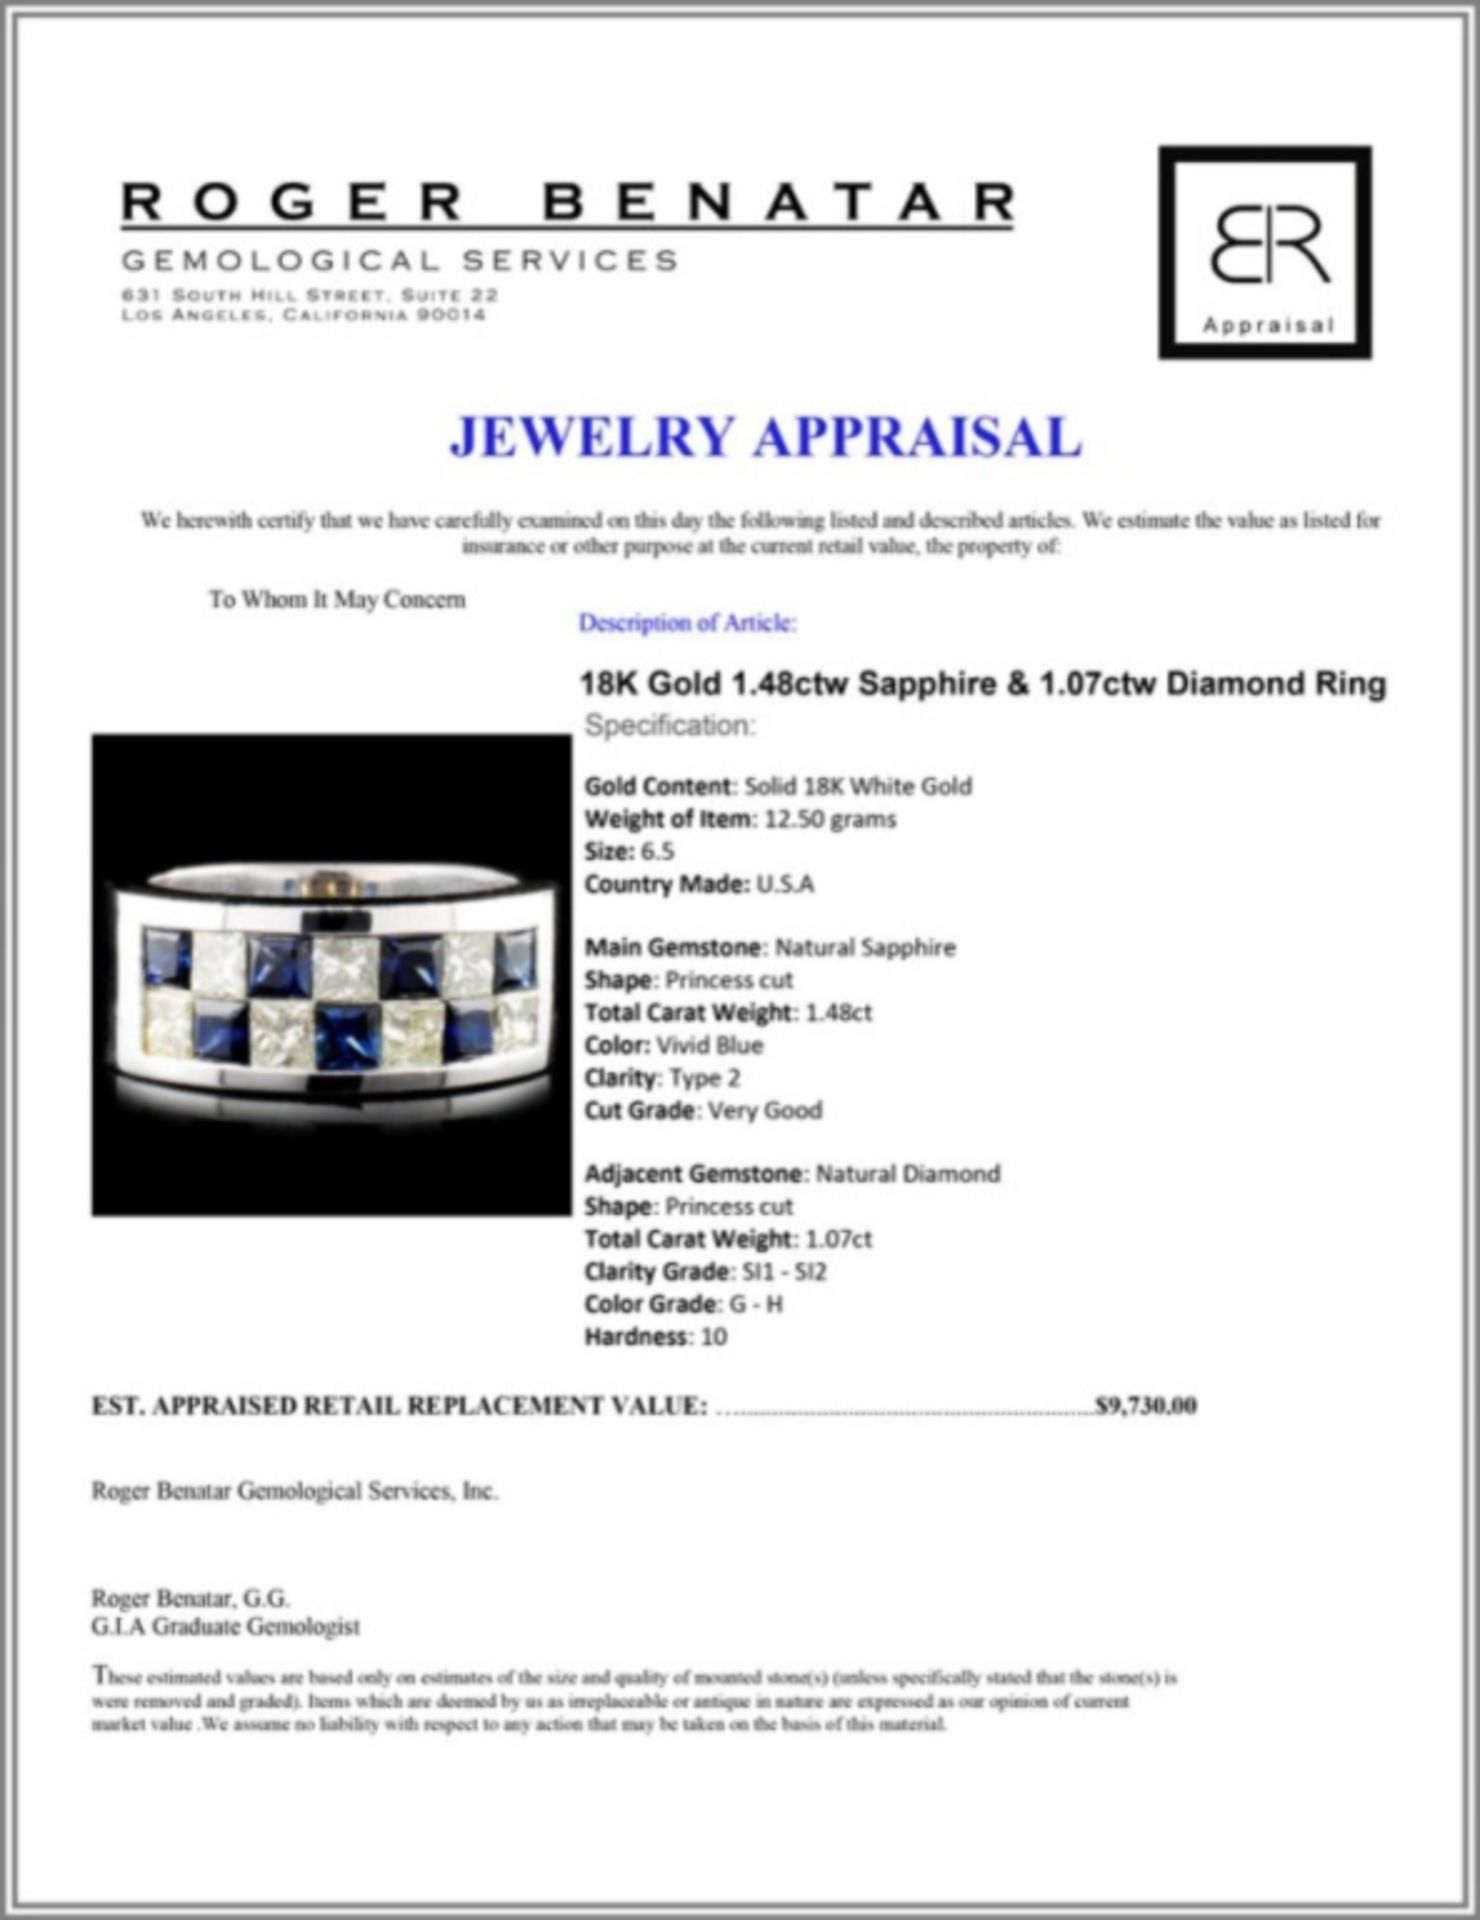 18K Gold 1.48ctw Sapphire & 1.07ctw Diamond Ring - Image 3 of 3